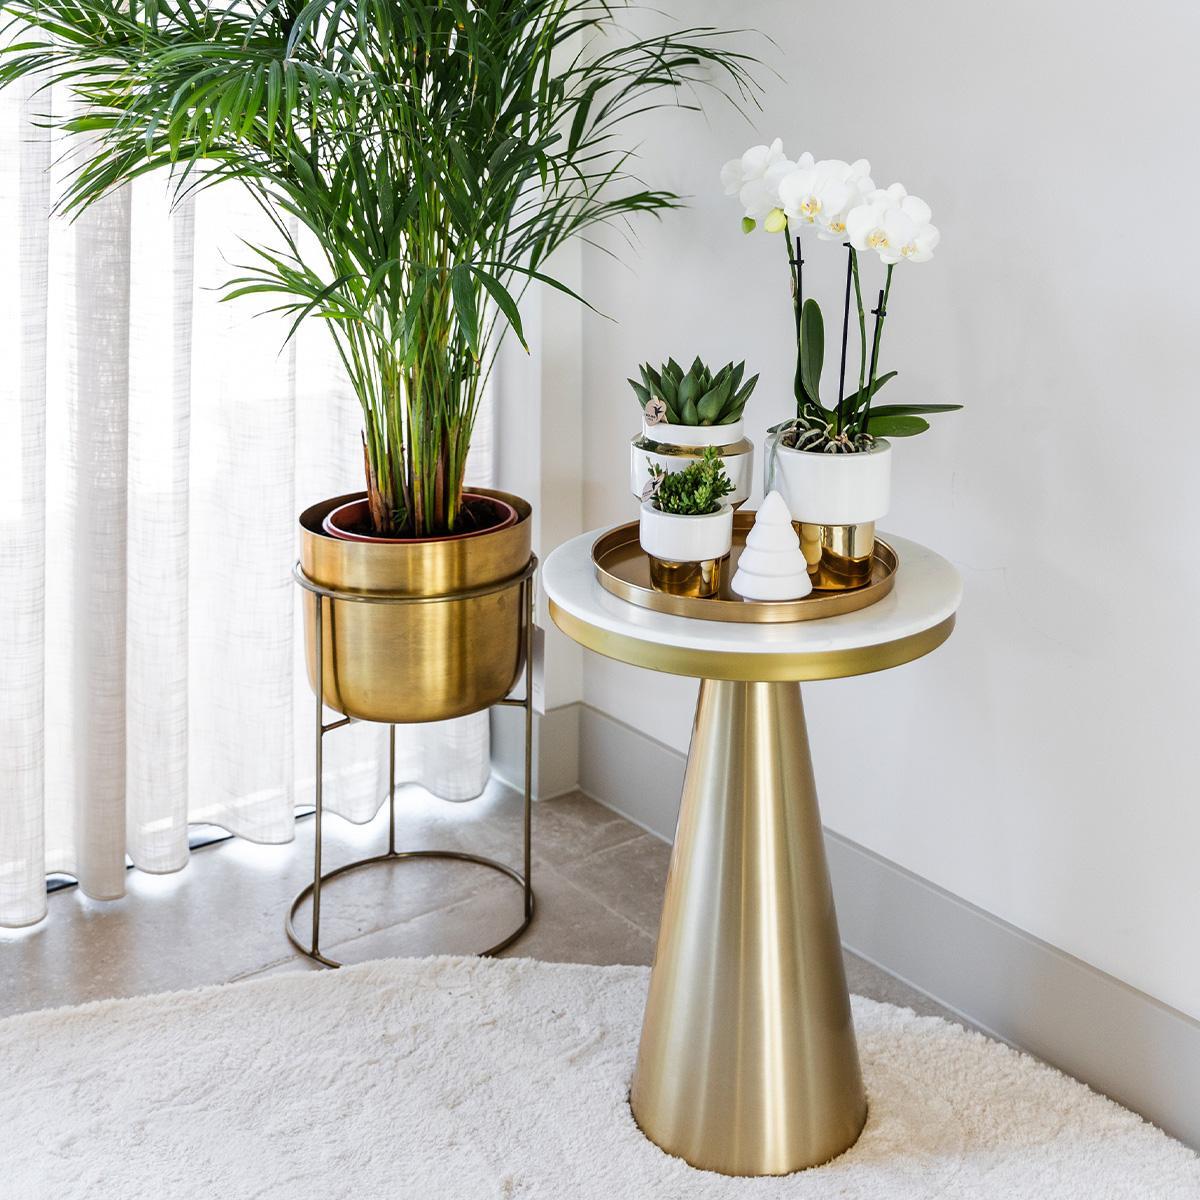 Kolibri Company | Gift set Christmas gold| Plantenset met witte Phalaenopsis Orchidee en Succulenten incl. keramieken sierpotten